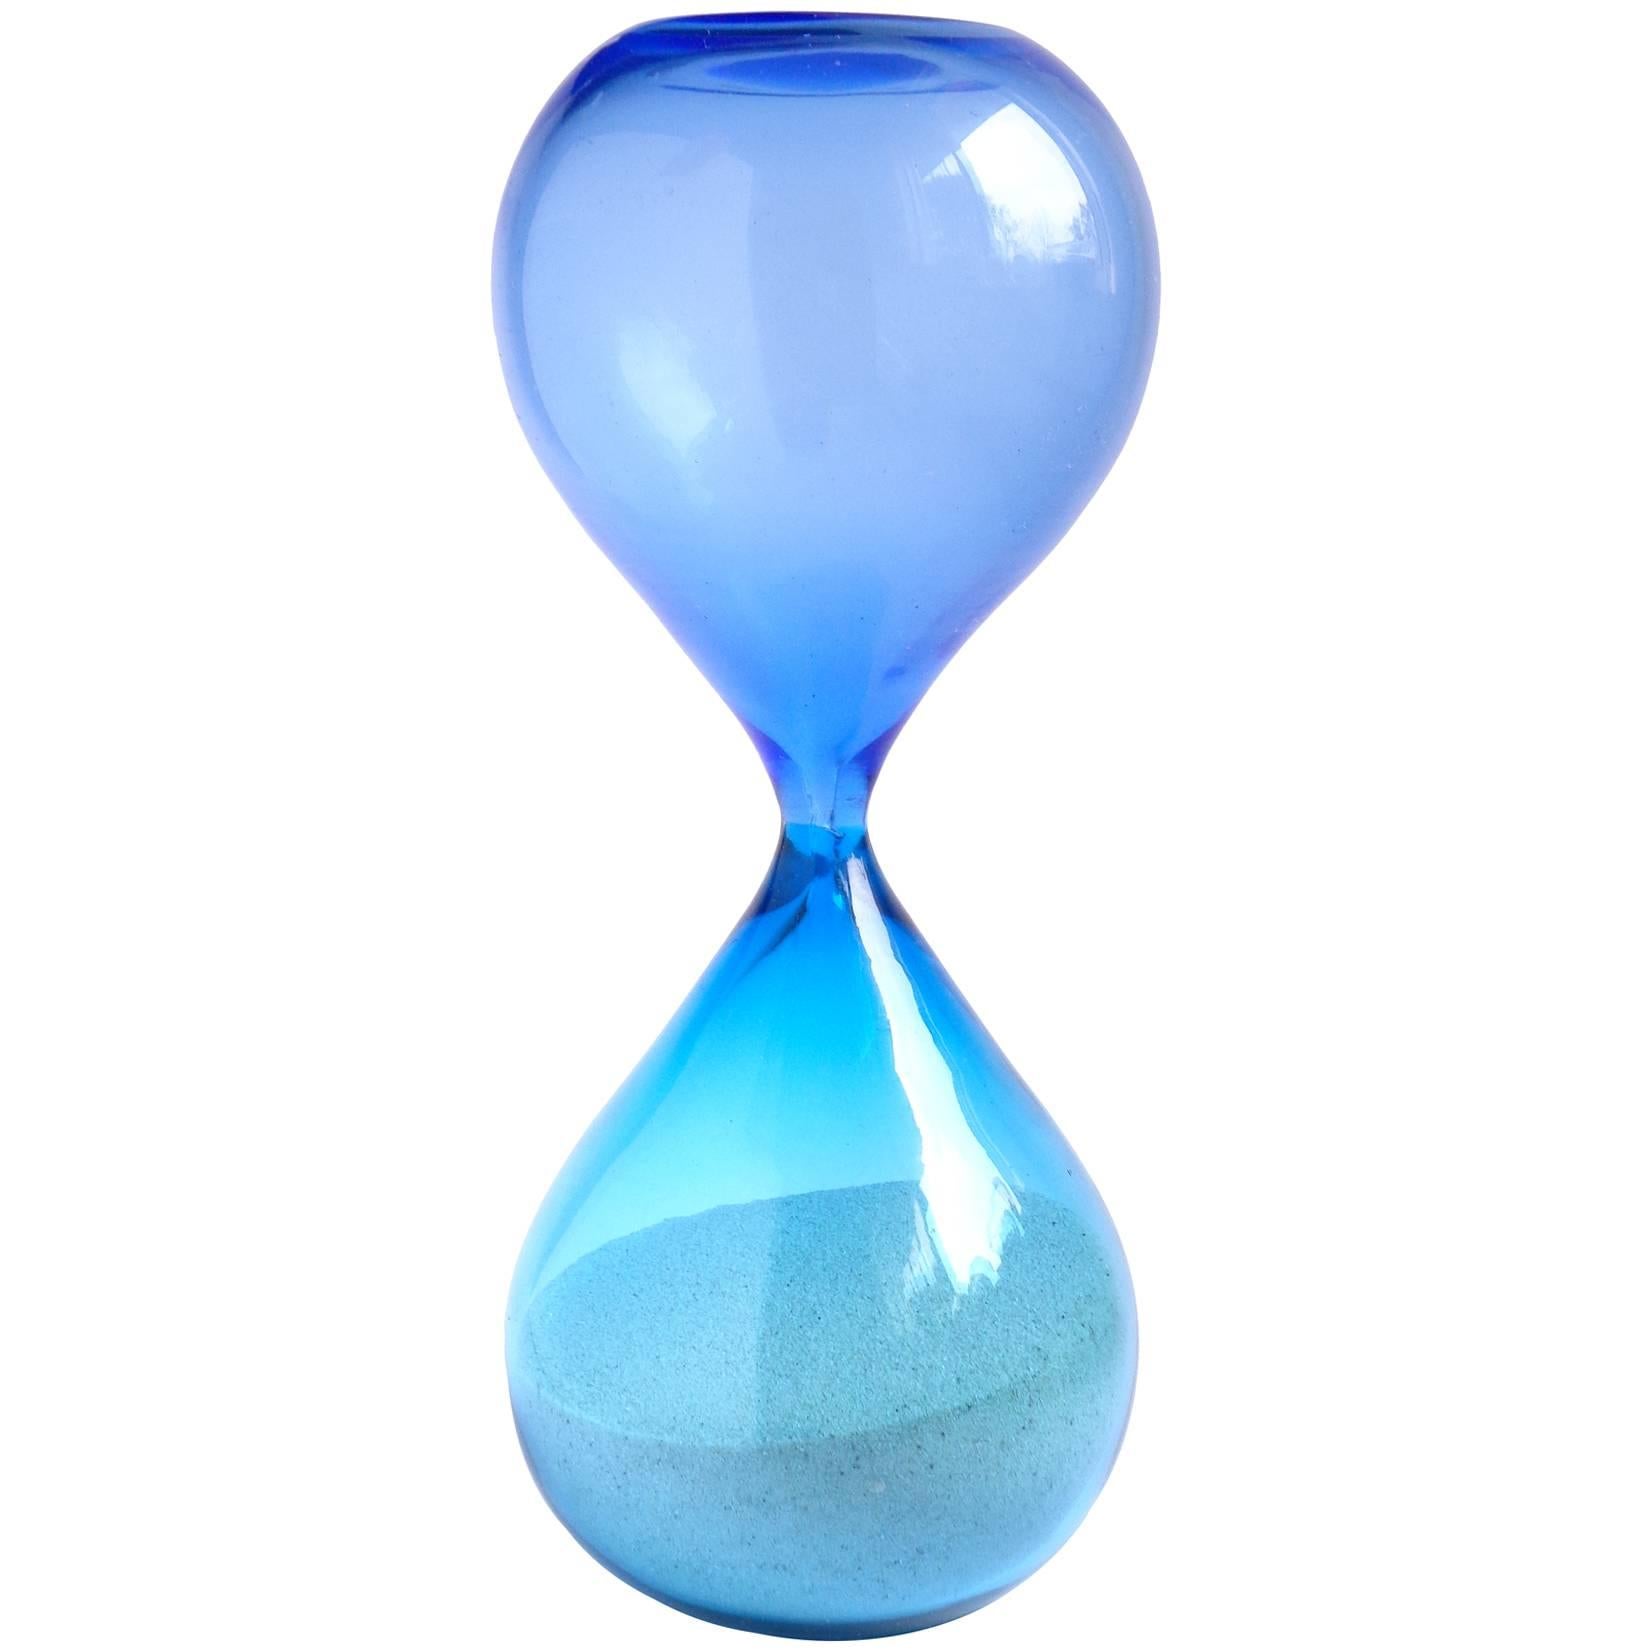 Paolo Venini Murano Clessidre Cobalt and Blue Italian Art Glass Hourglass